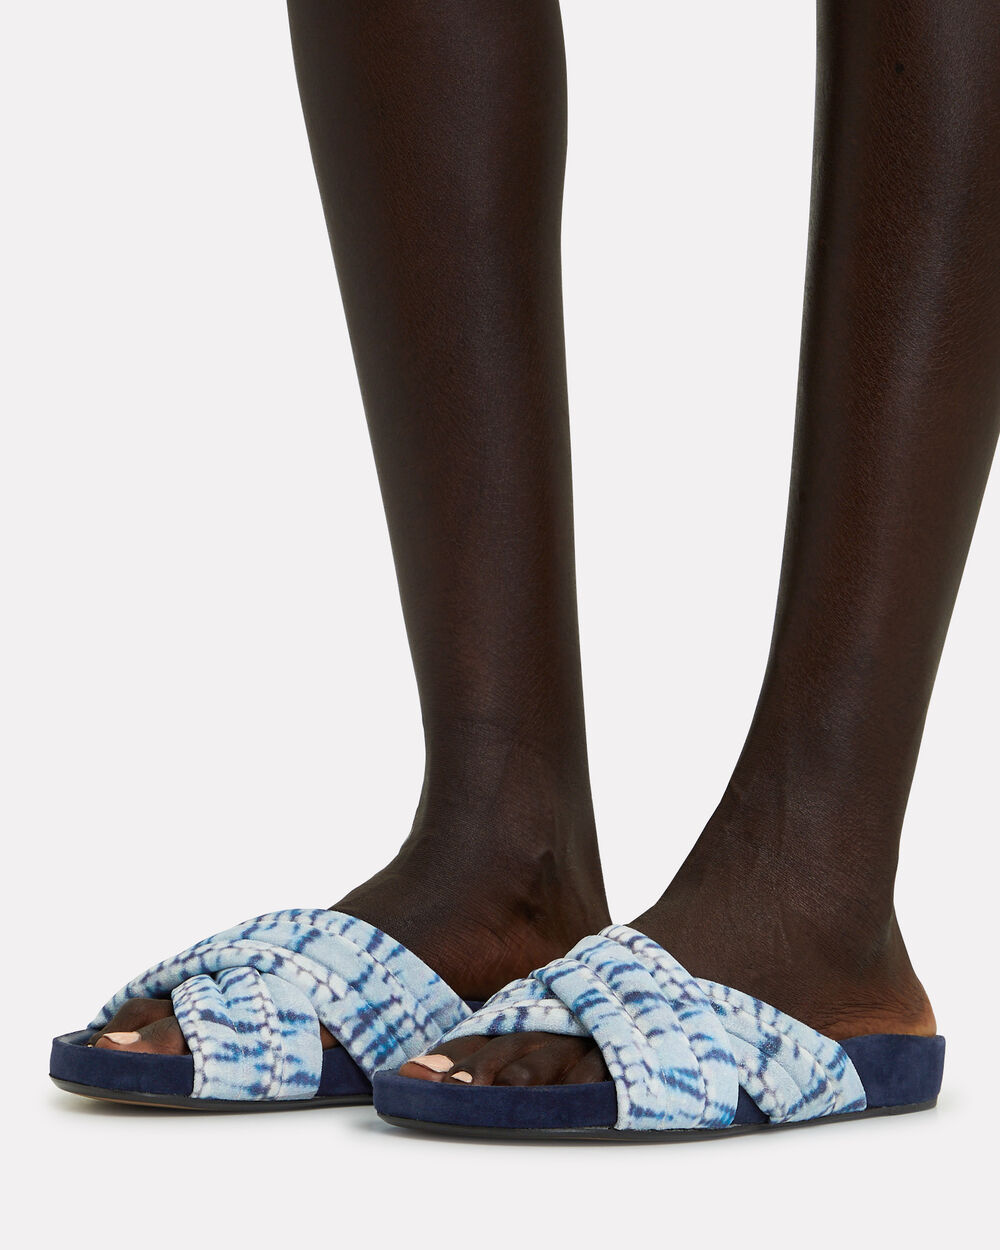 semafor Henstilling Talje Isabel Marant Holden Tie-Dye Slide Sandals | INTERMIX®